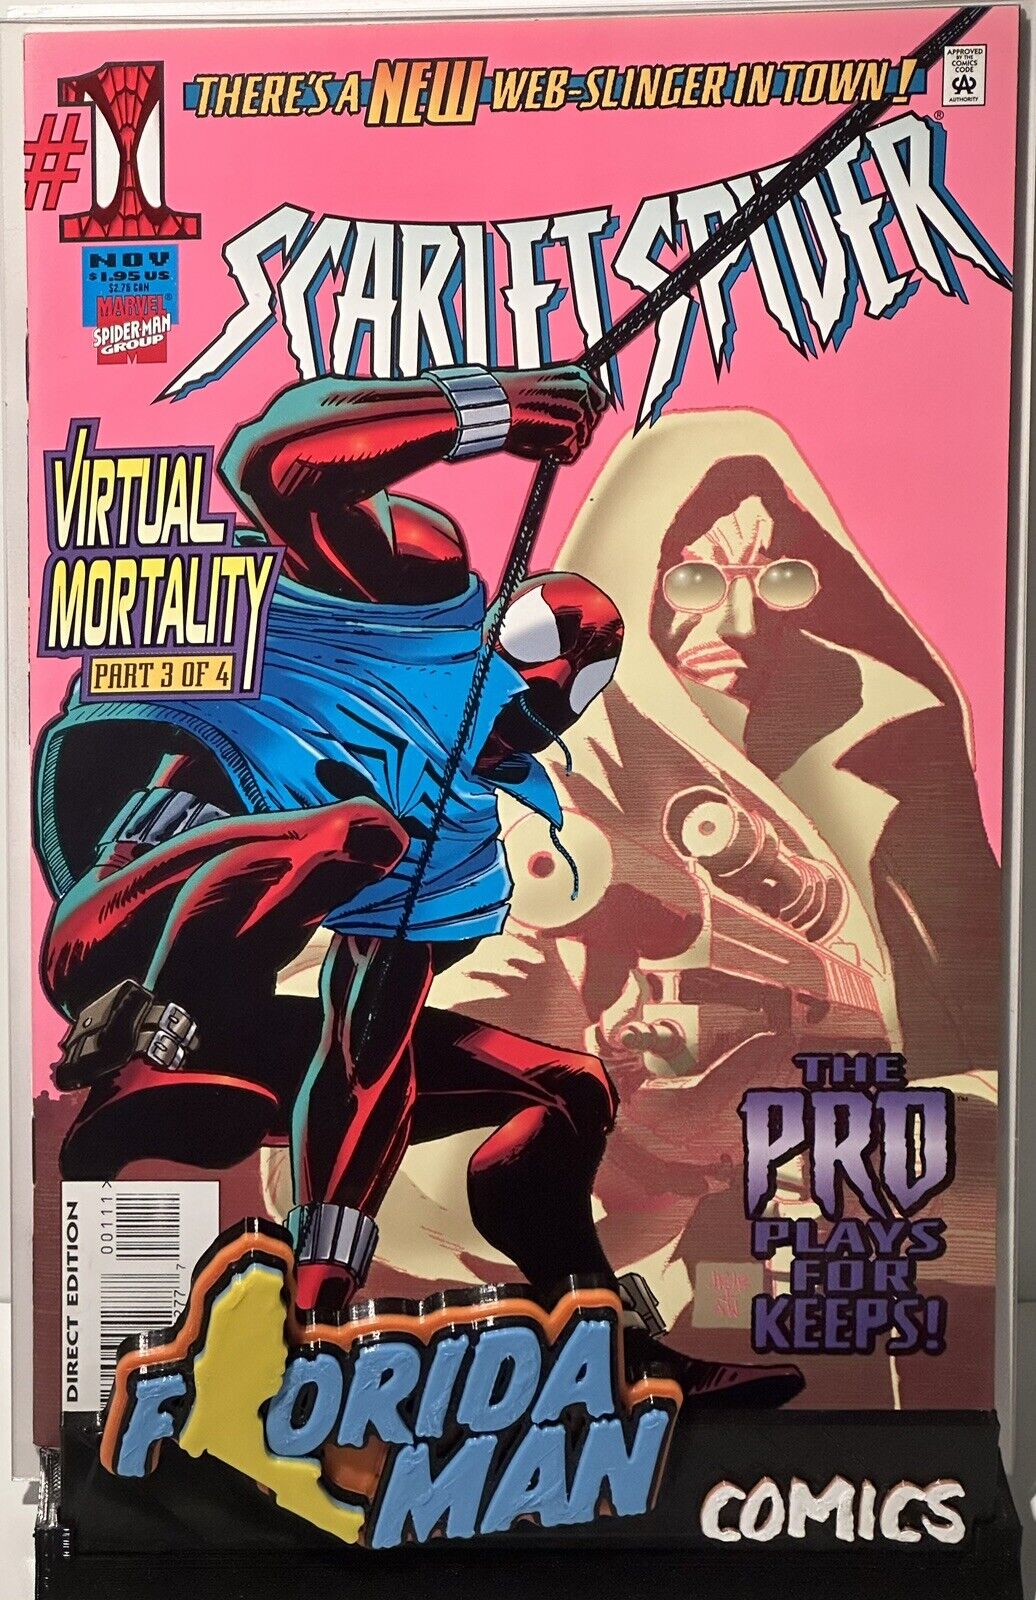 Scarlet Spider #1 VF/NM “Virtual Morality” part 3 of 4 John Romita Jr cover 1995